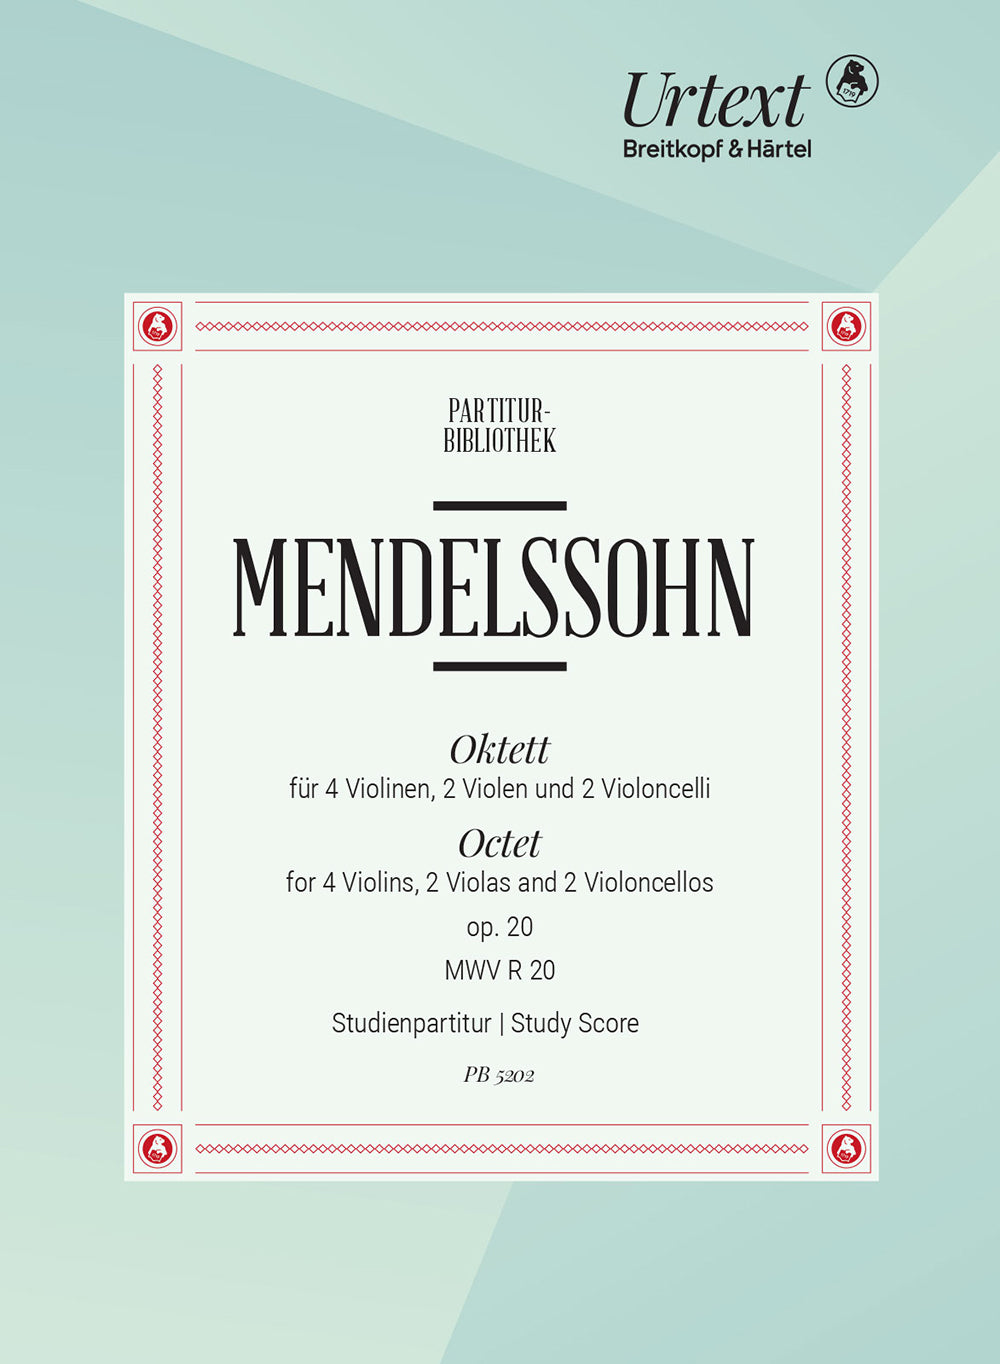 Mendelssohn Octet MWV R 20 Op. 20